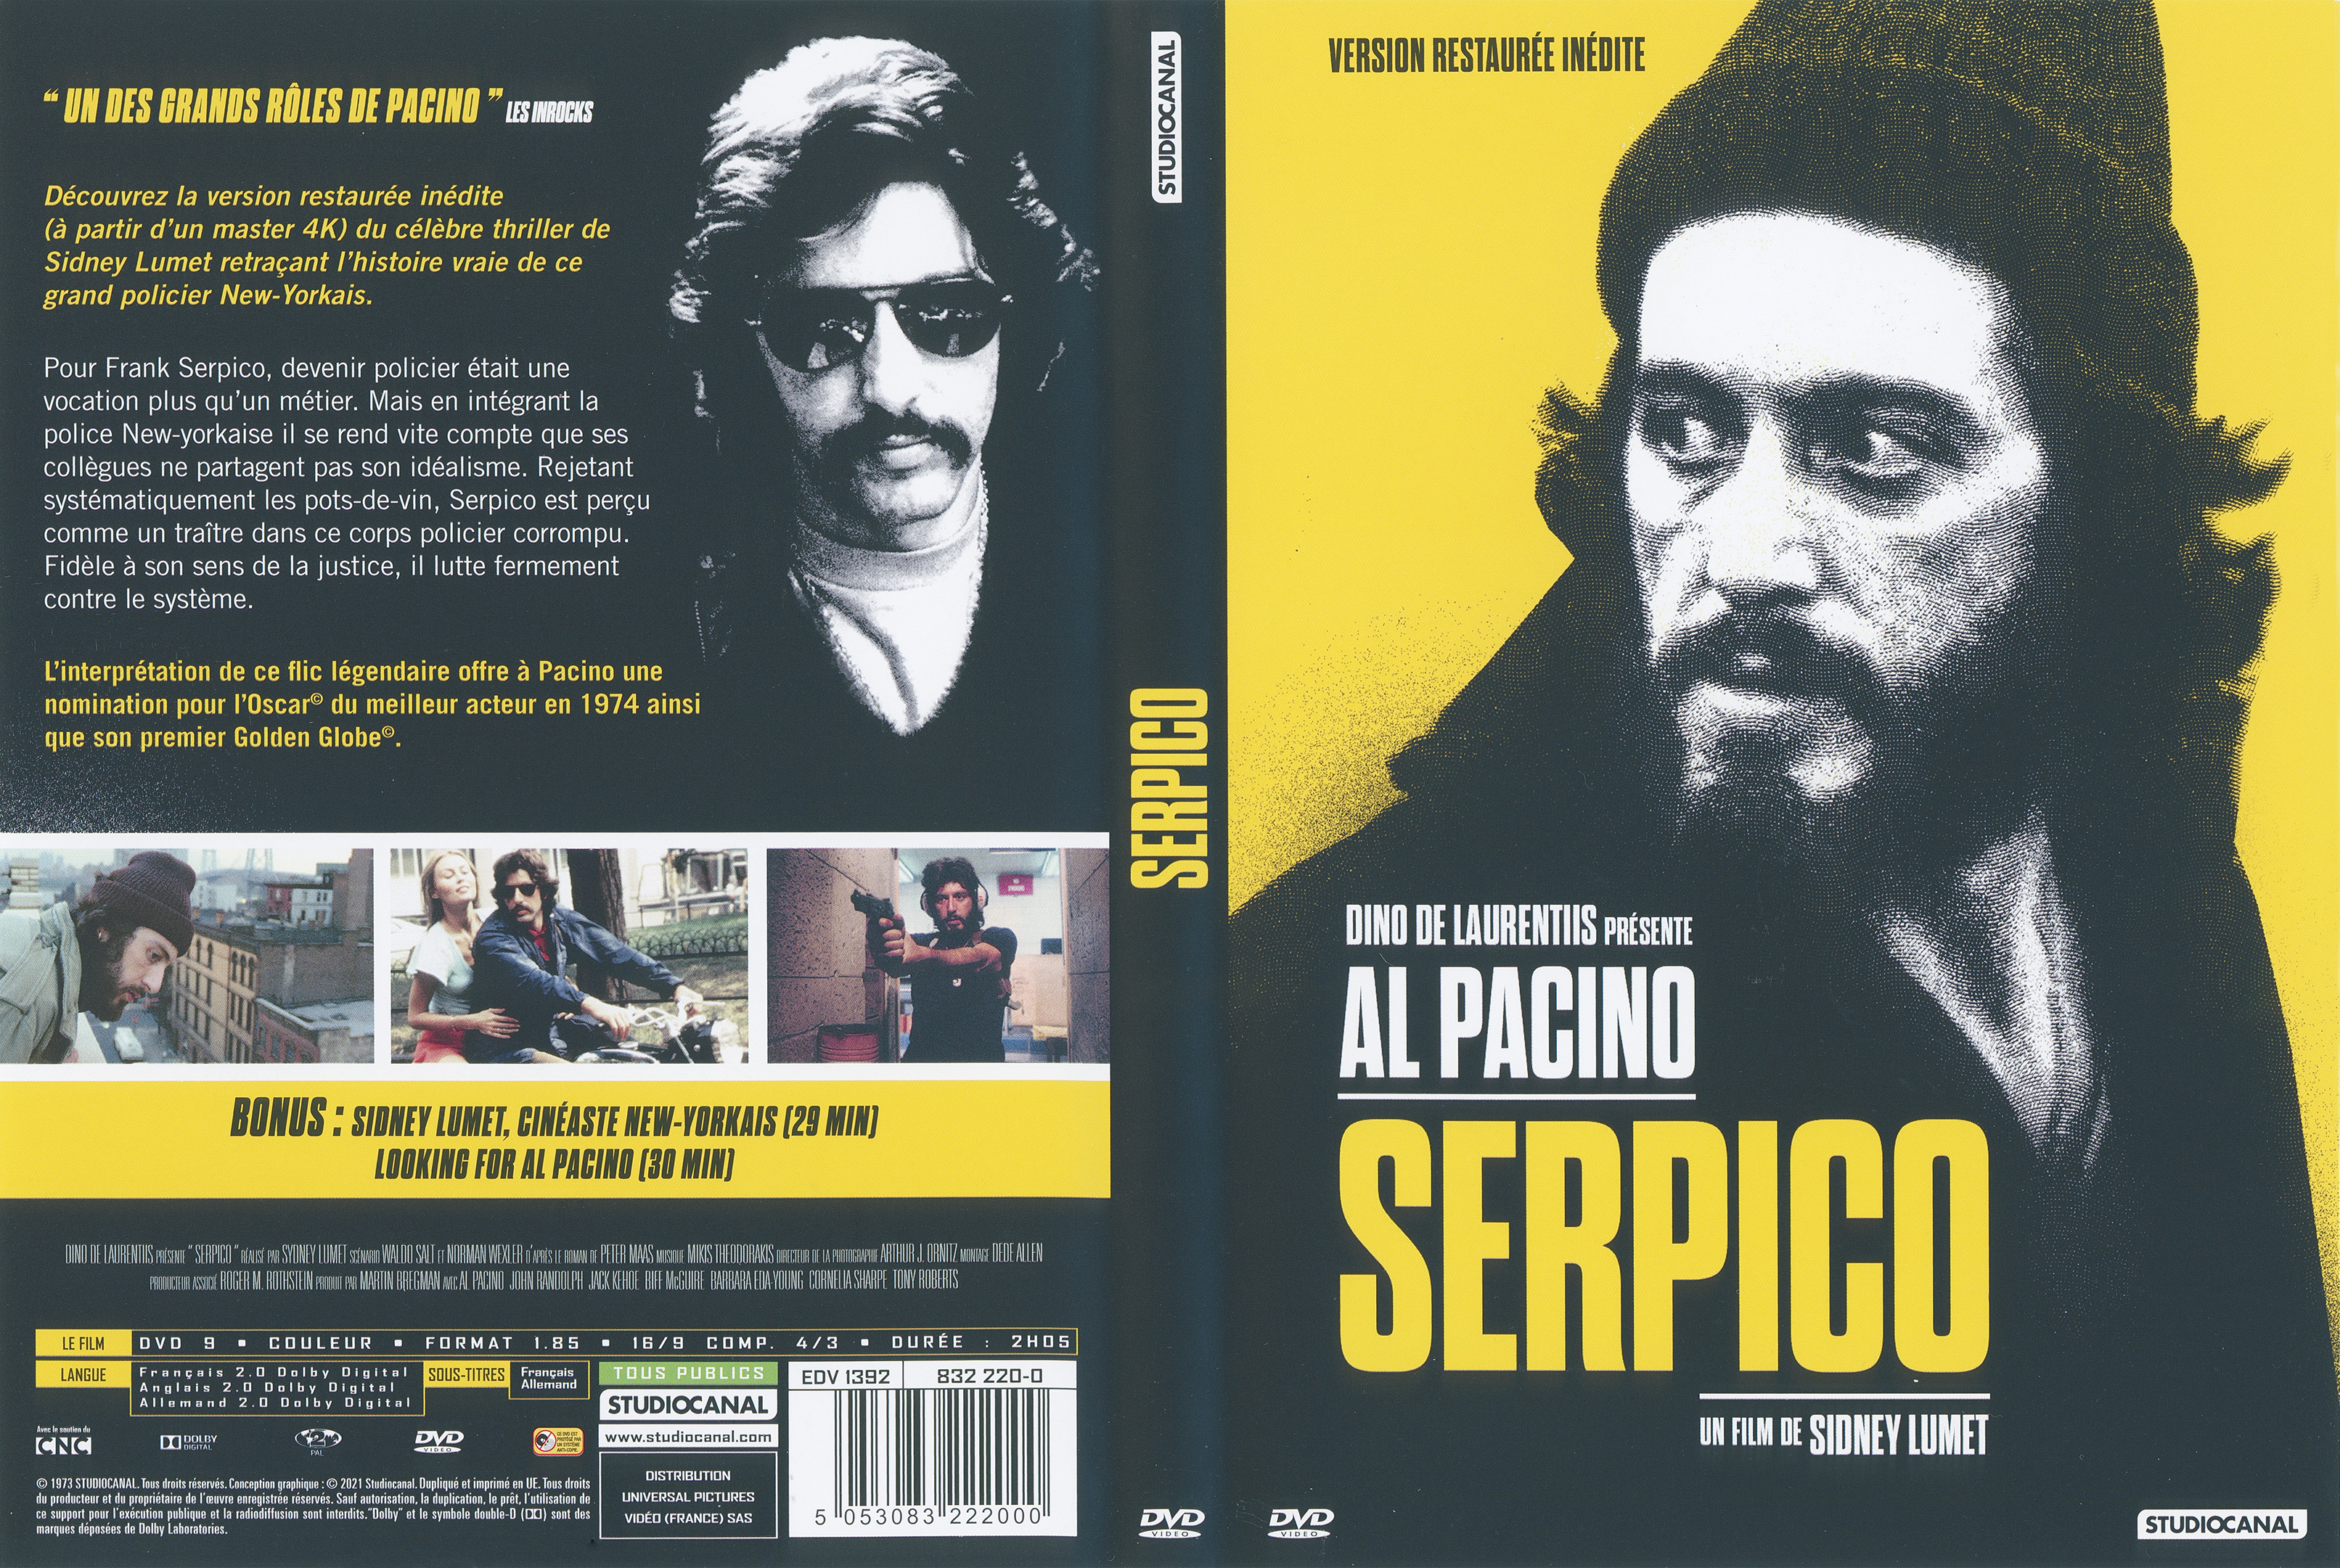 Jaquette DVD Serpico v2